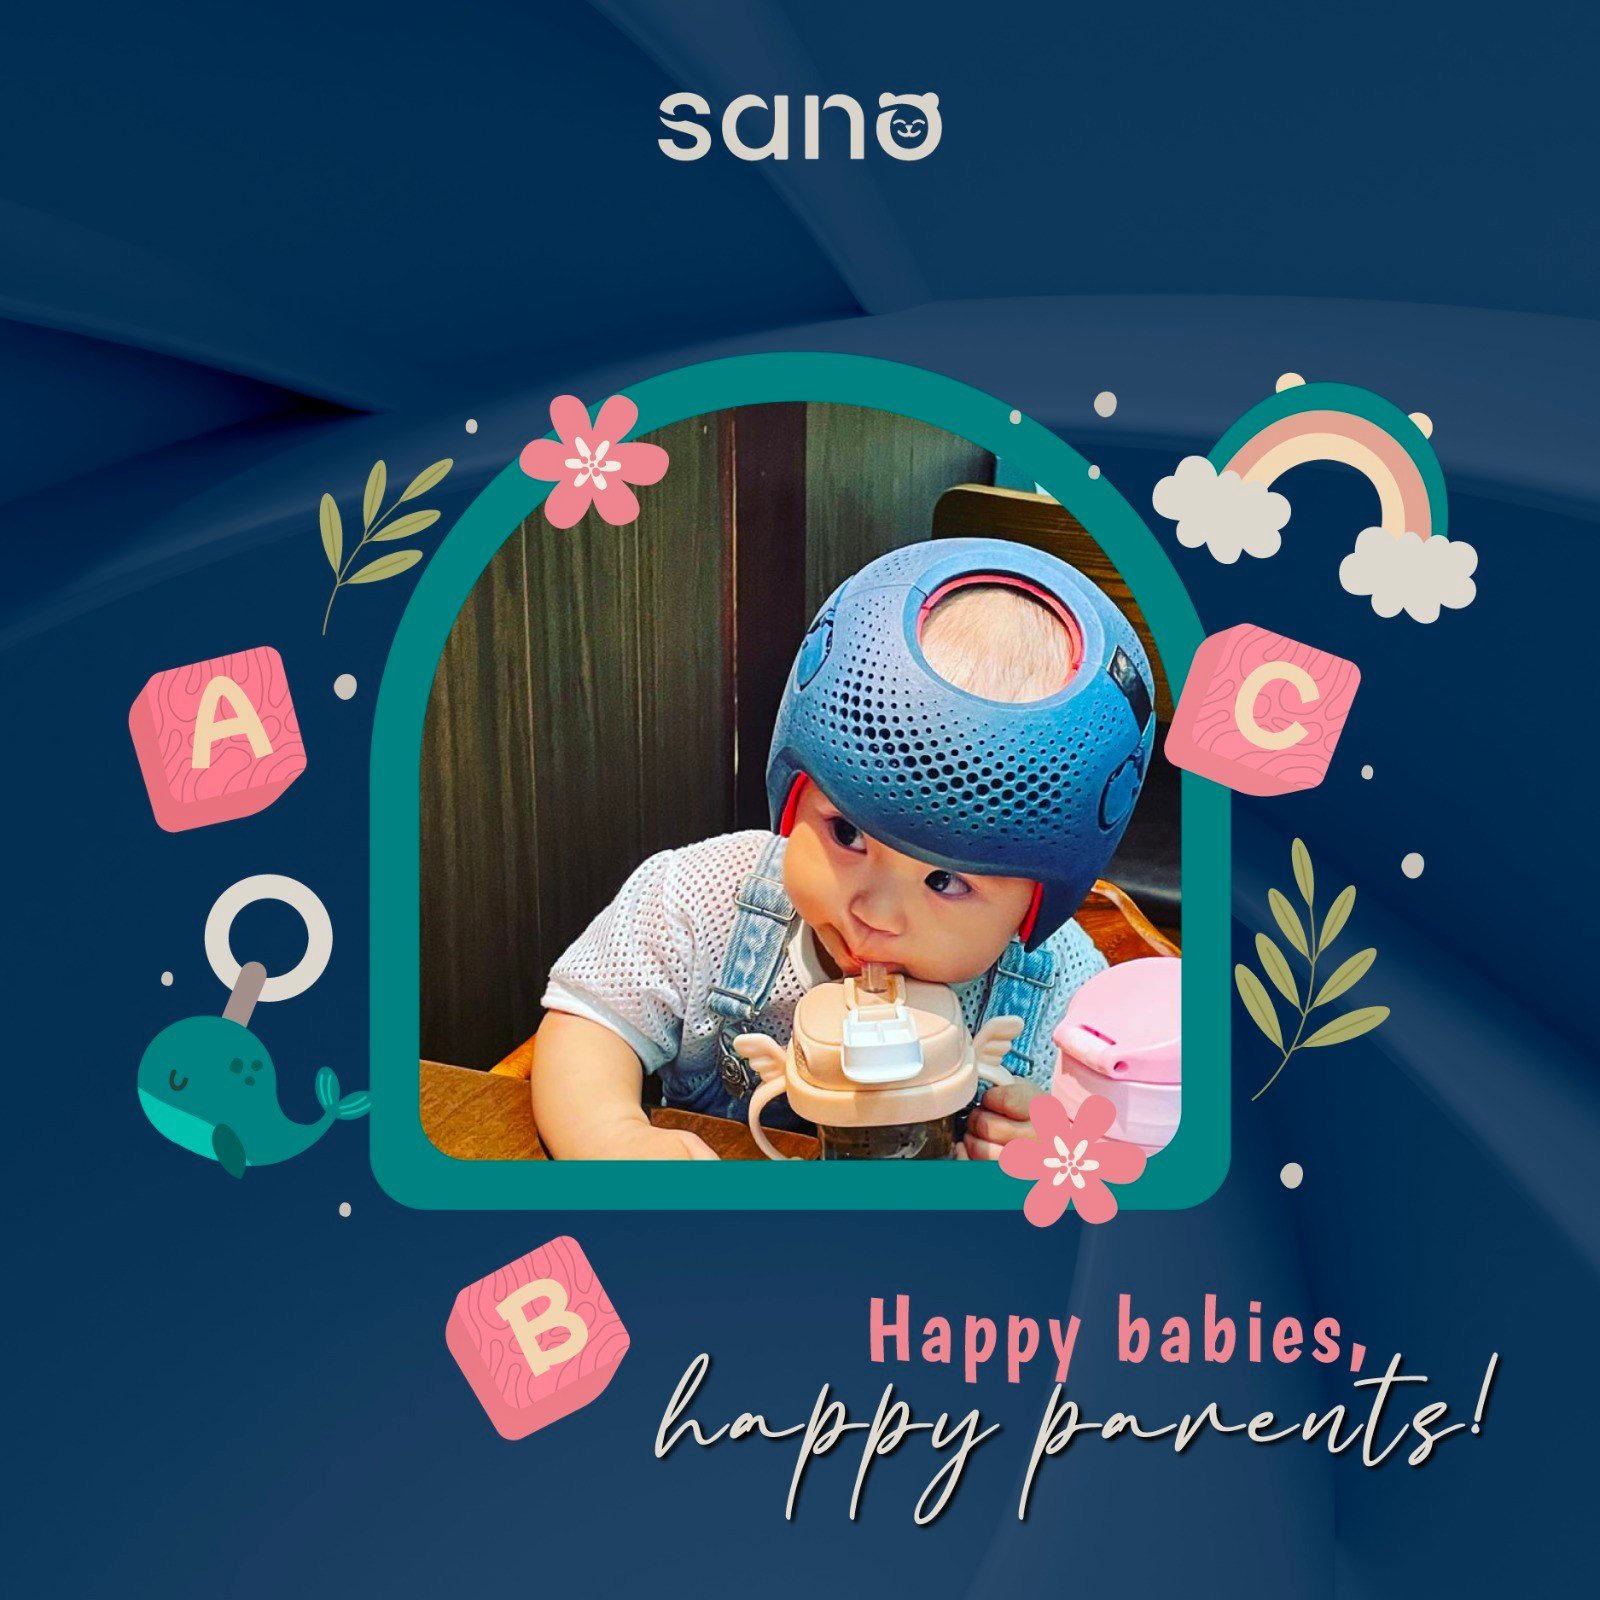 Happy babies mean happy parents, and that's what motivates us every day! 👶😊

#sanoorthotics #sanoortho #baby #helmet #orthosis #happybabies #happyparents